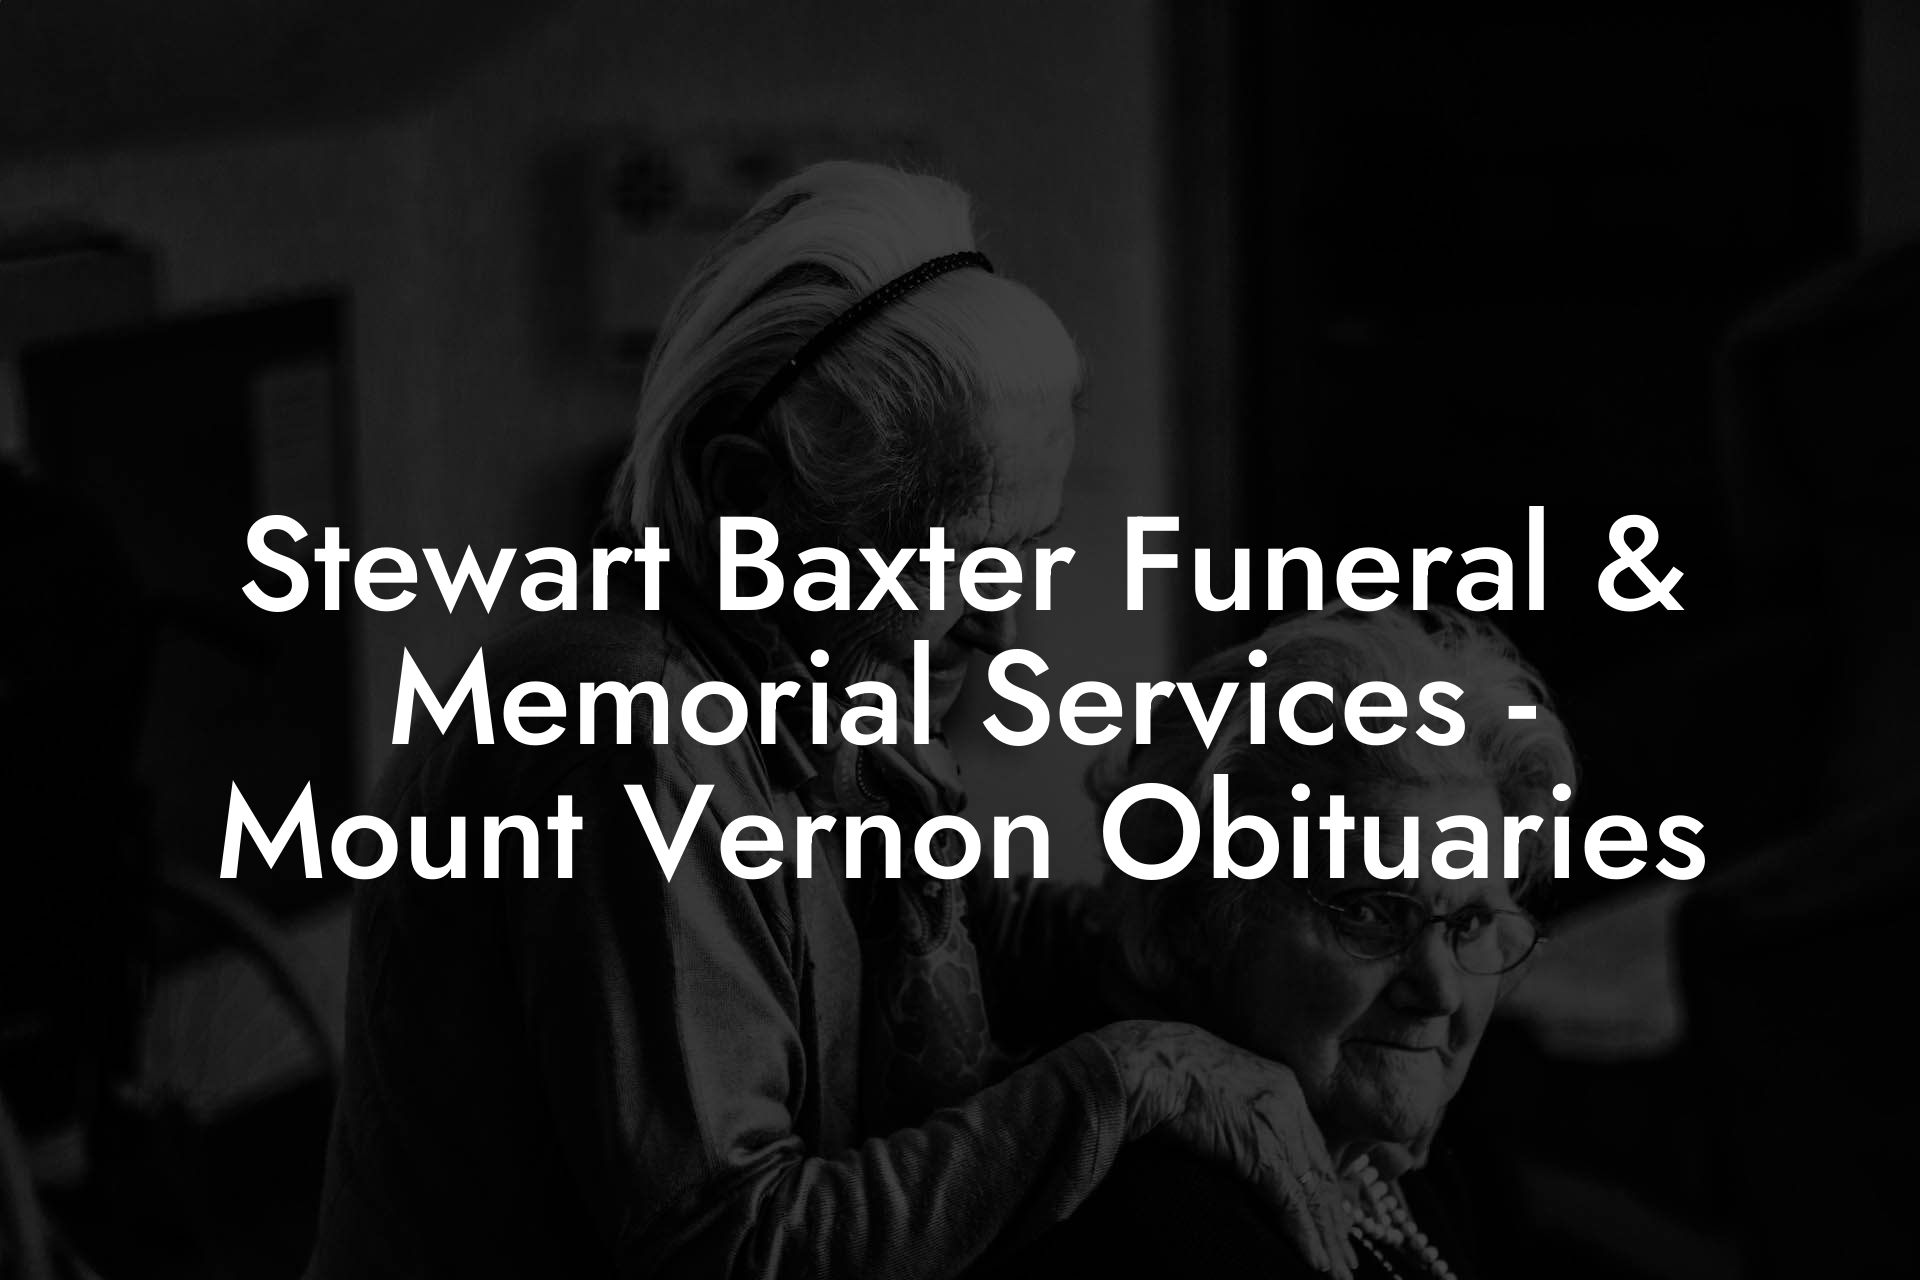 Stewart Baxter Funeral & Memorial Services - Mount Vernon Obituaries